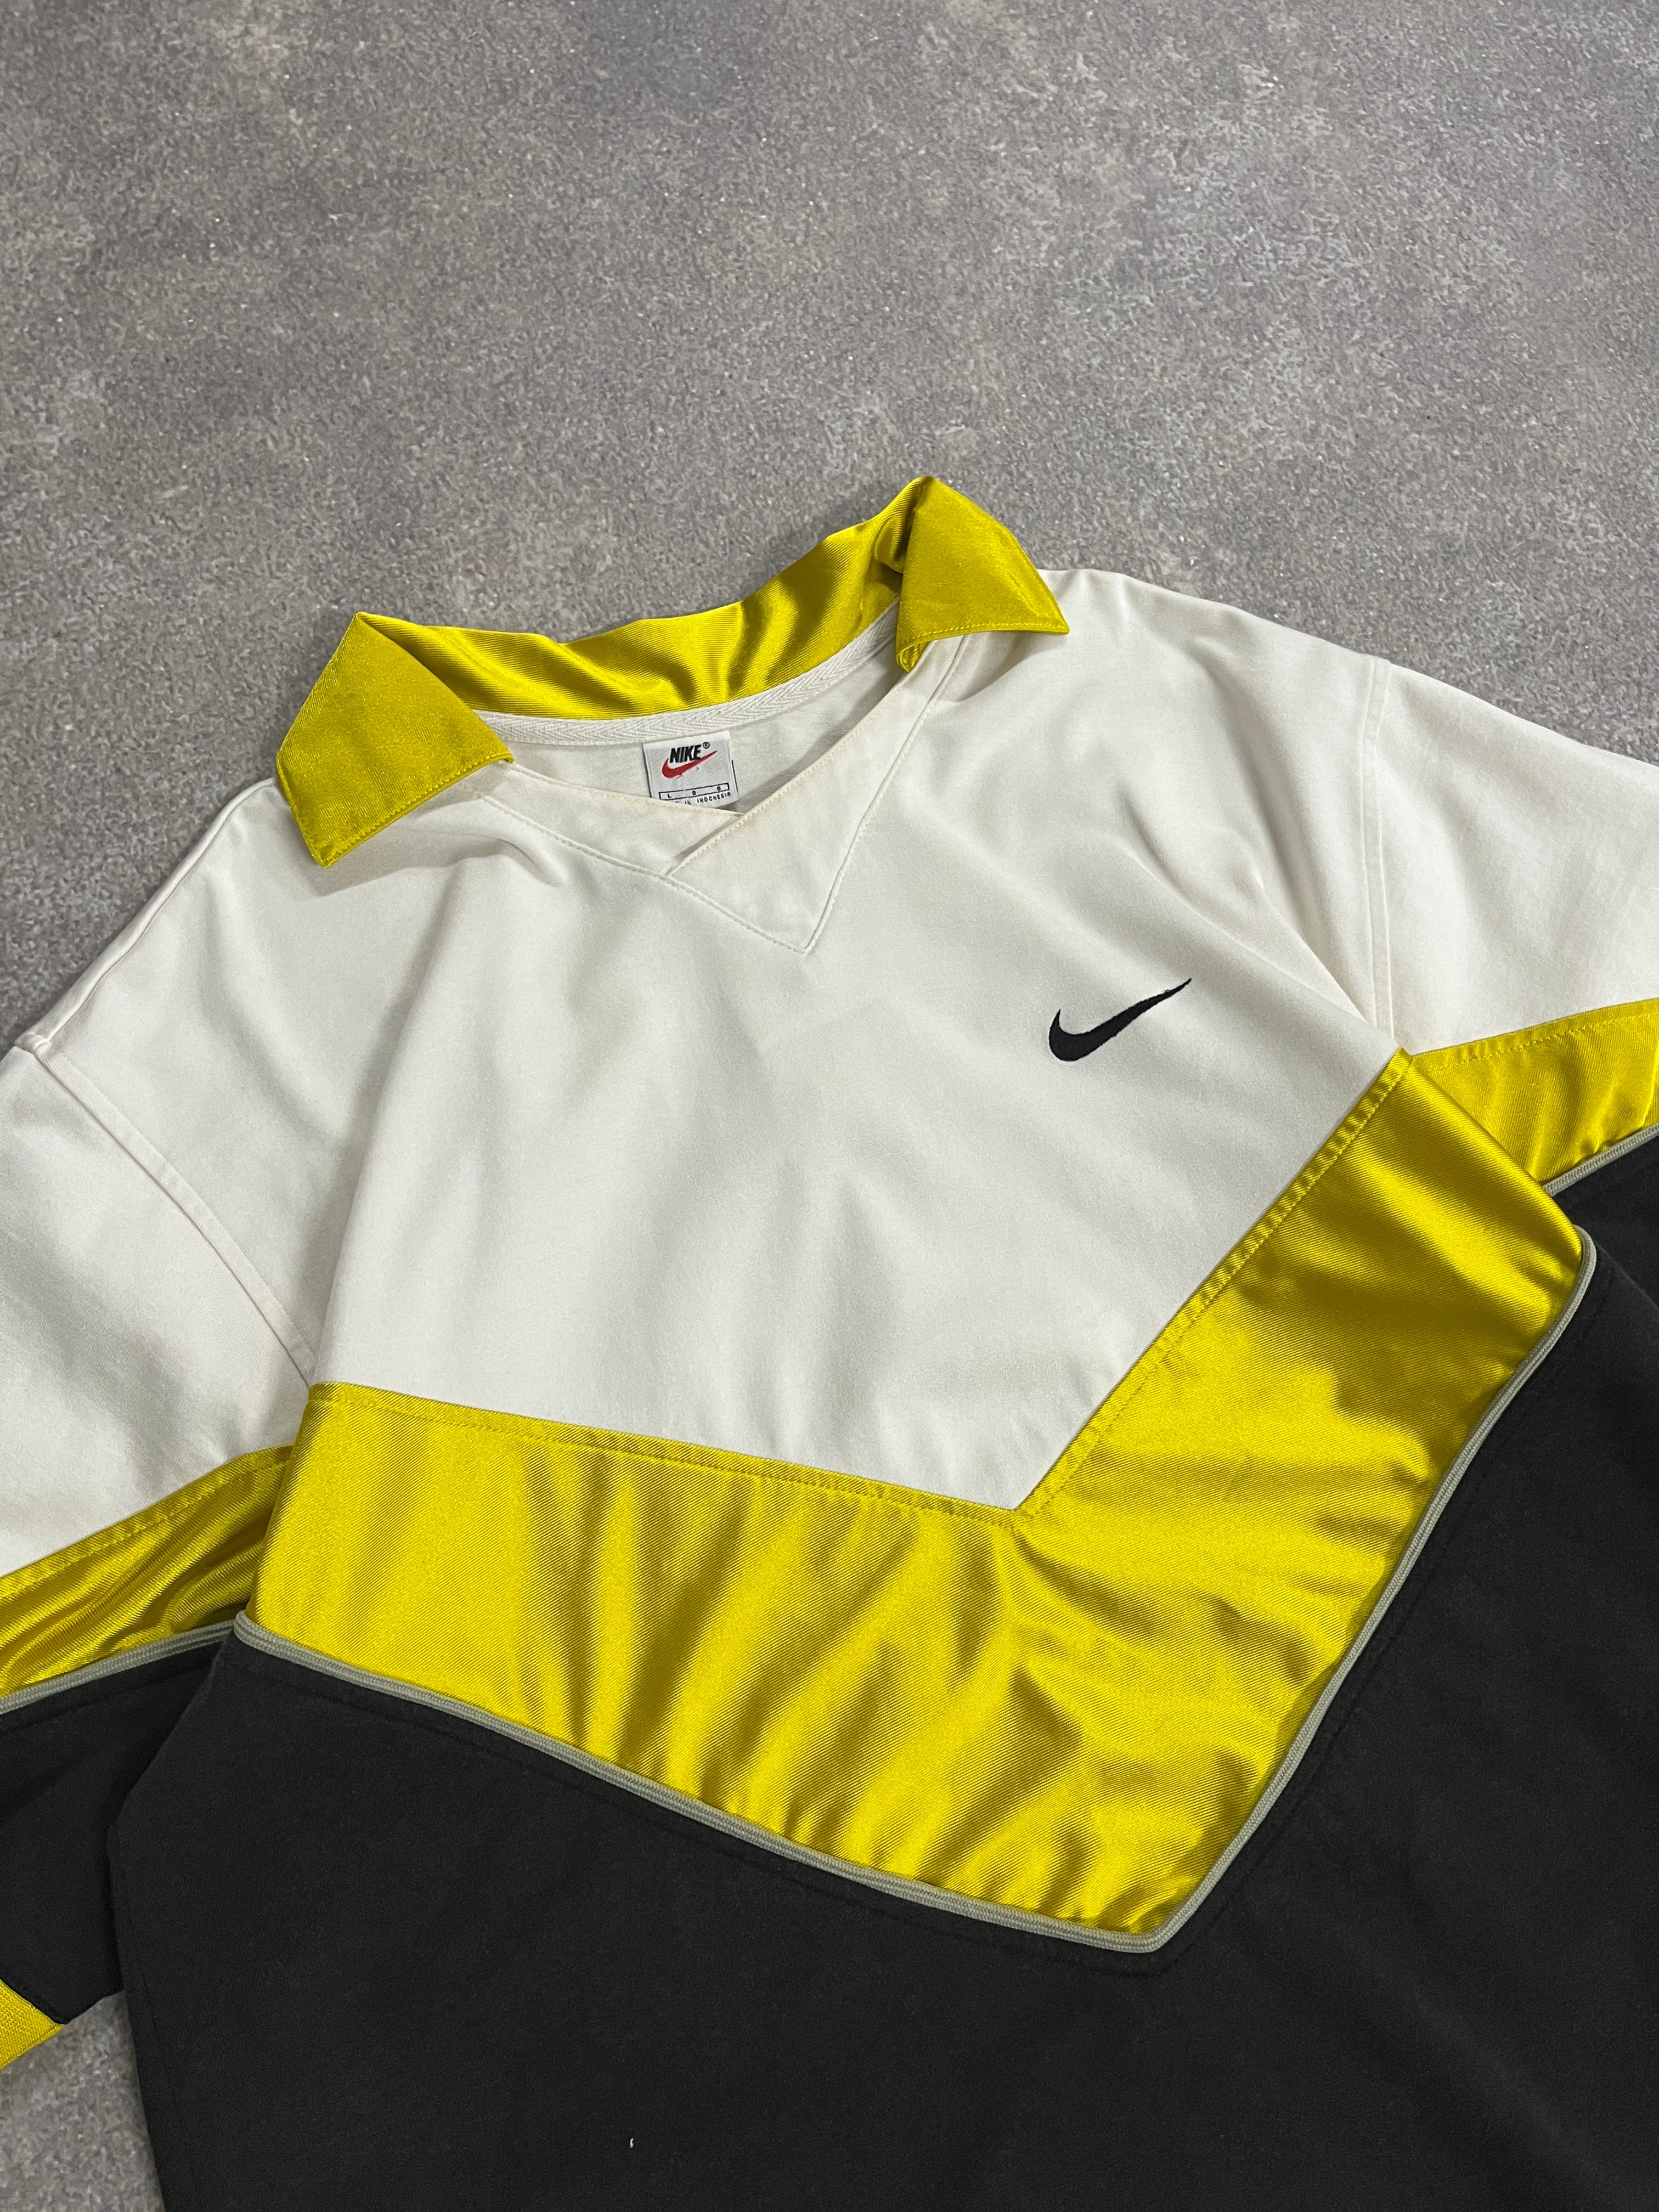 Vintage Nike Jersey TShirt White // Large - RHAGHOUSE VINTAGE